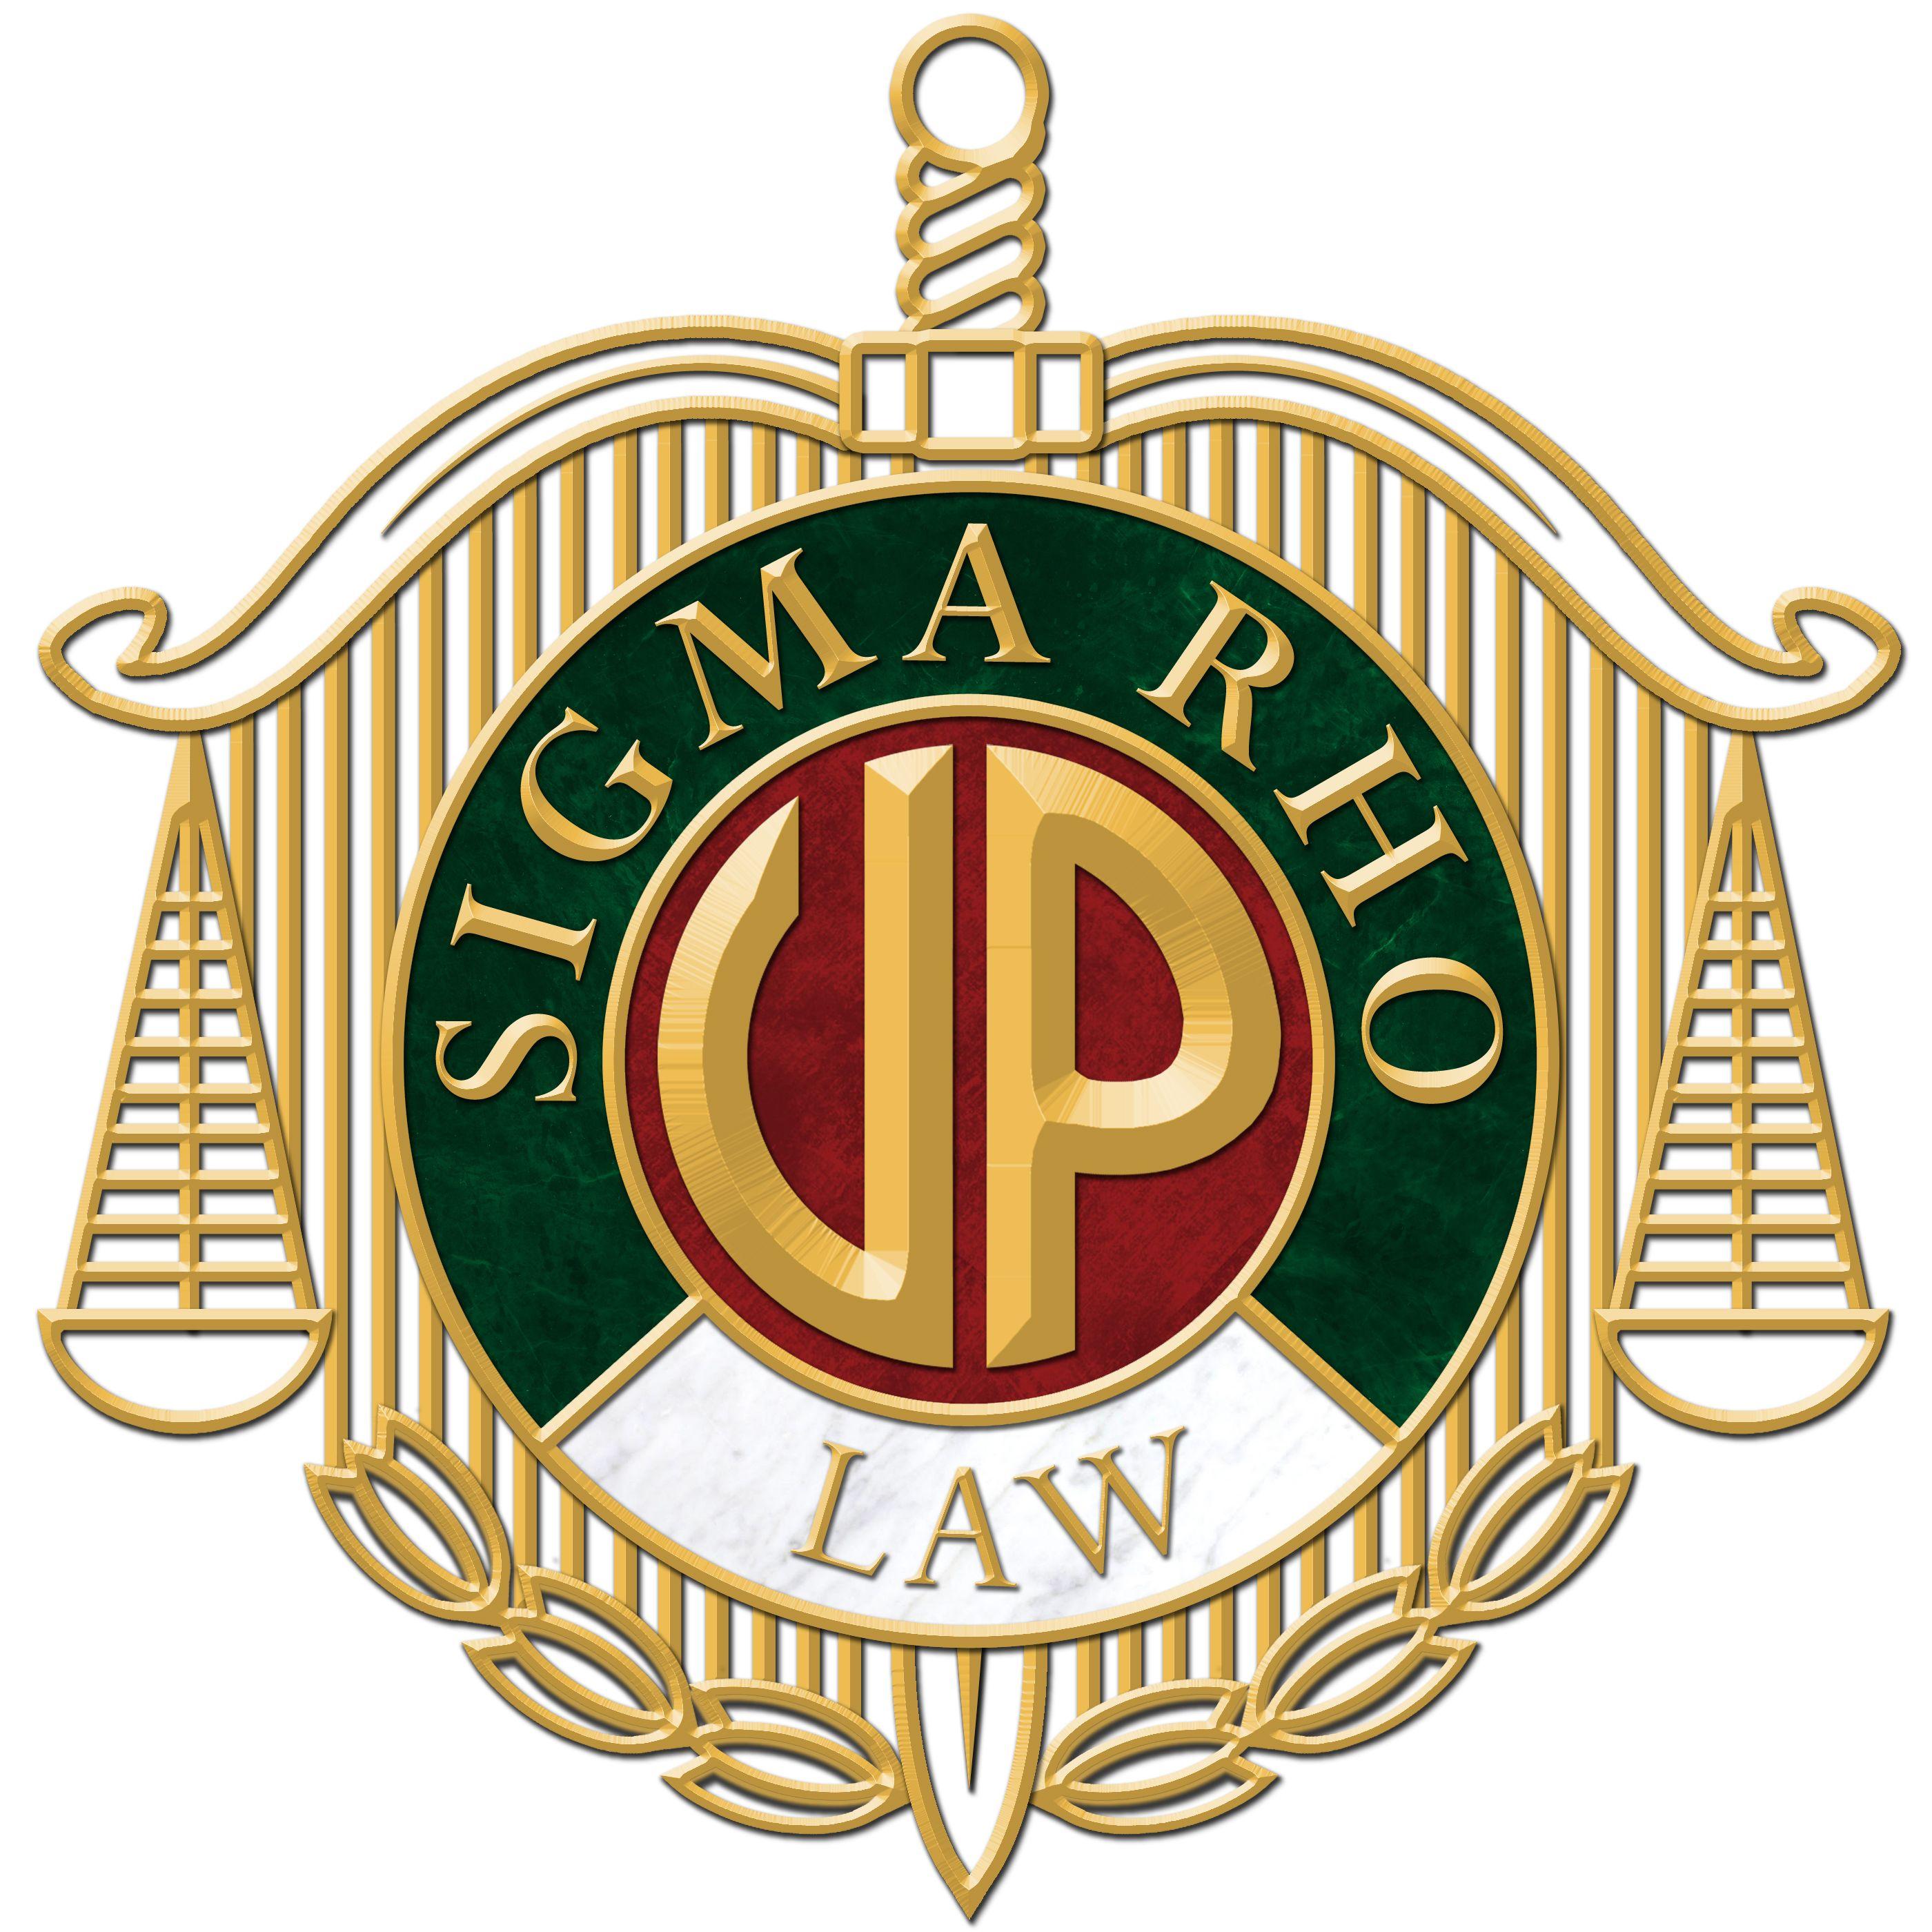 Fraternity Logo - UP Sigma Rho Fraternity